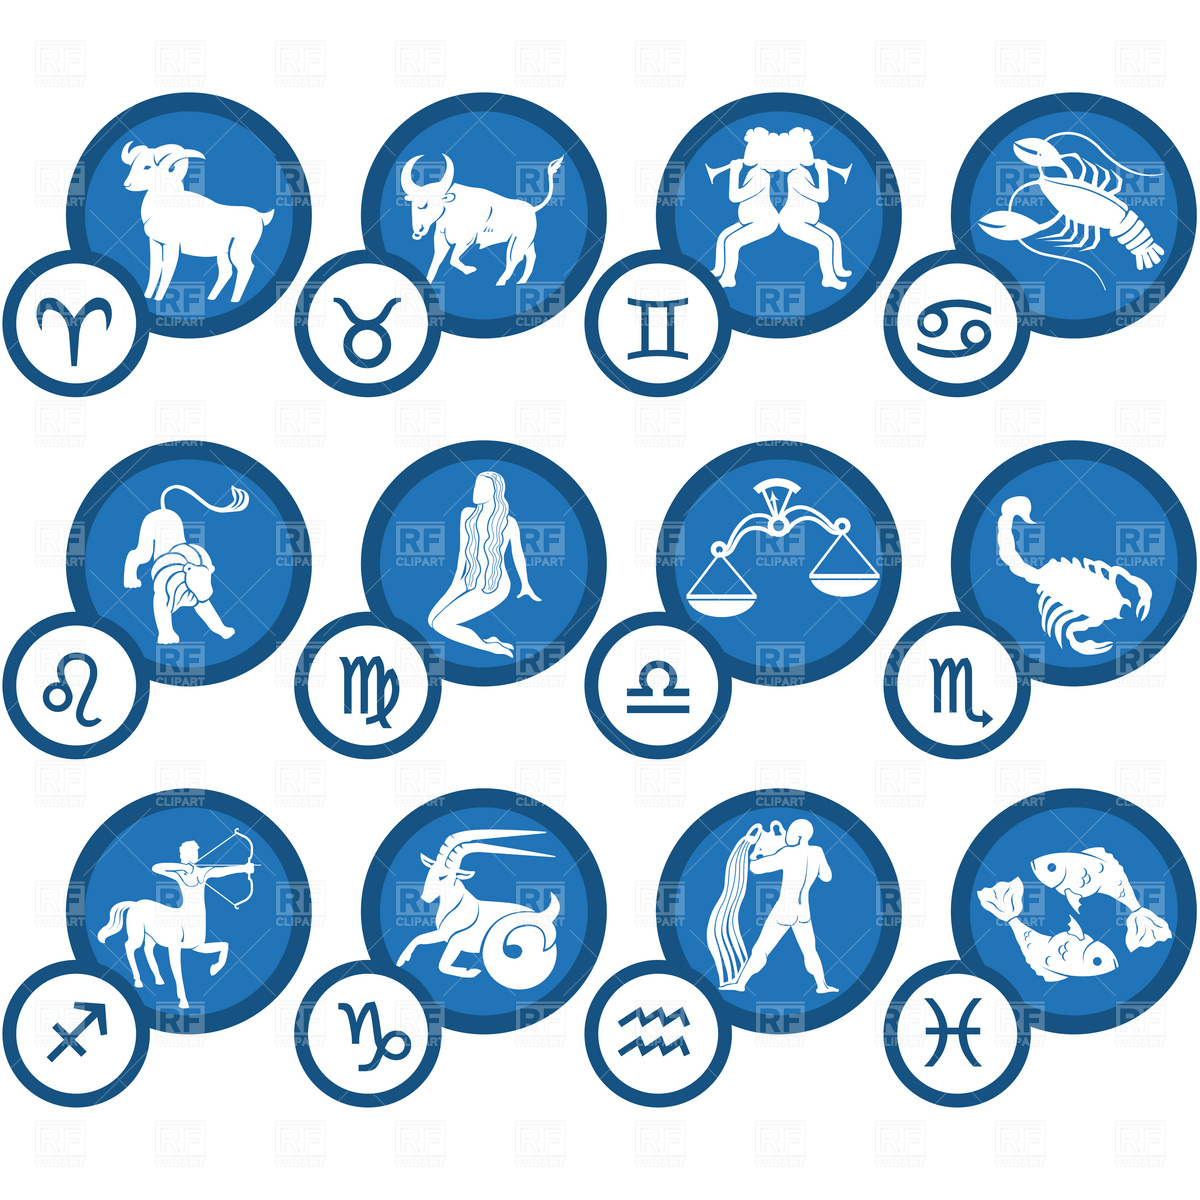 Free Zodiac Symbols Pictures Download Free Zodiac Symbols